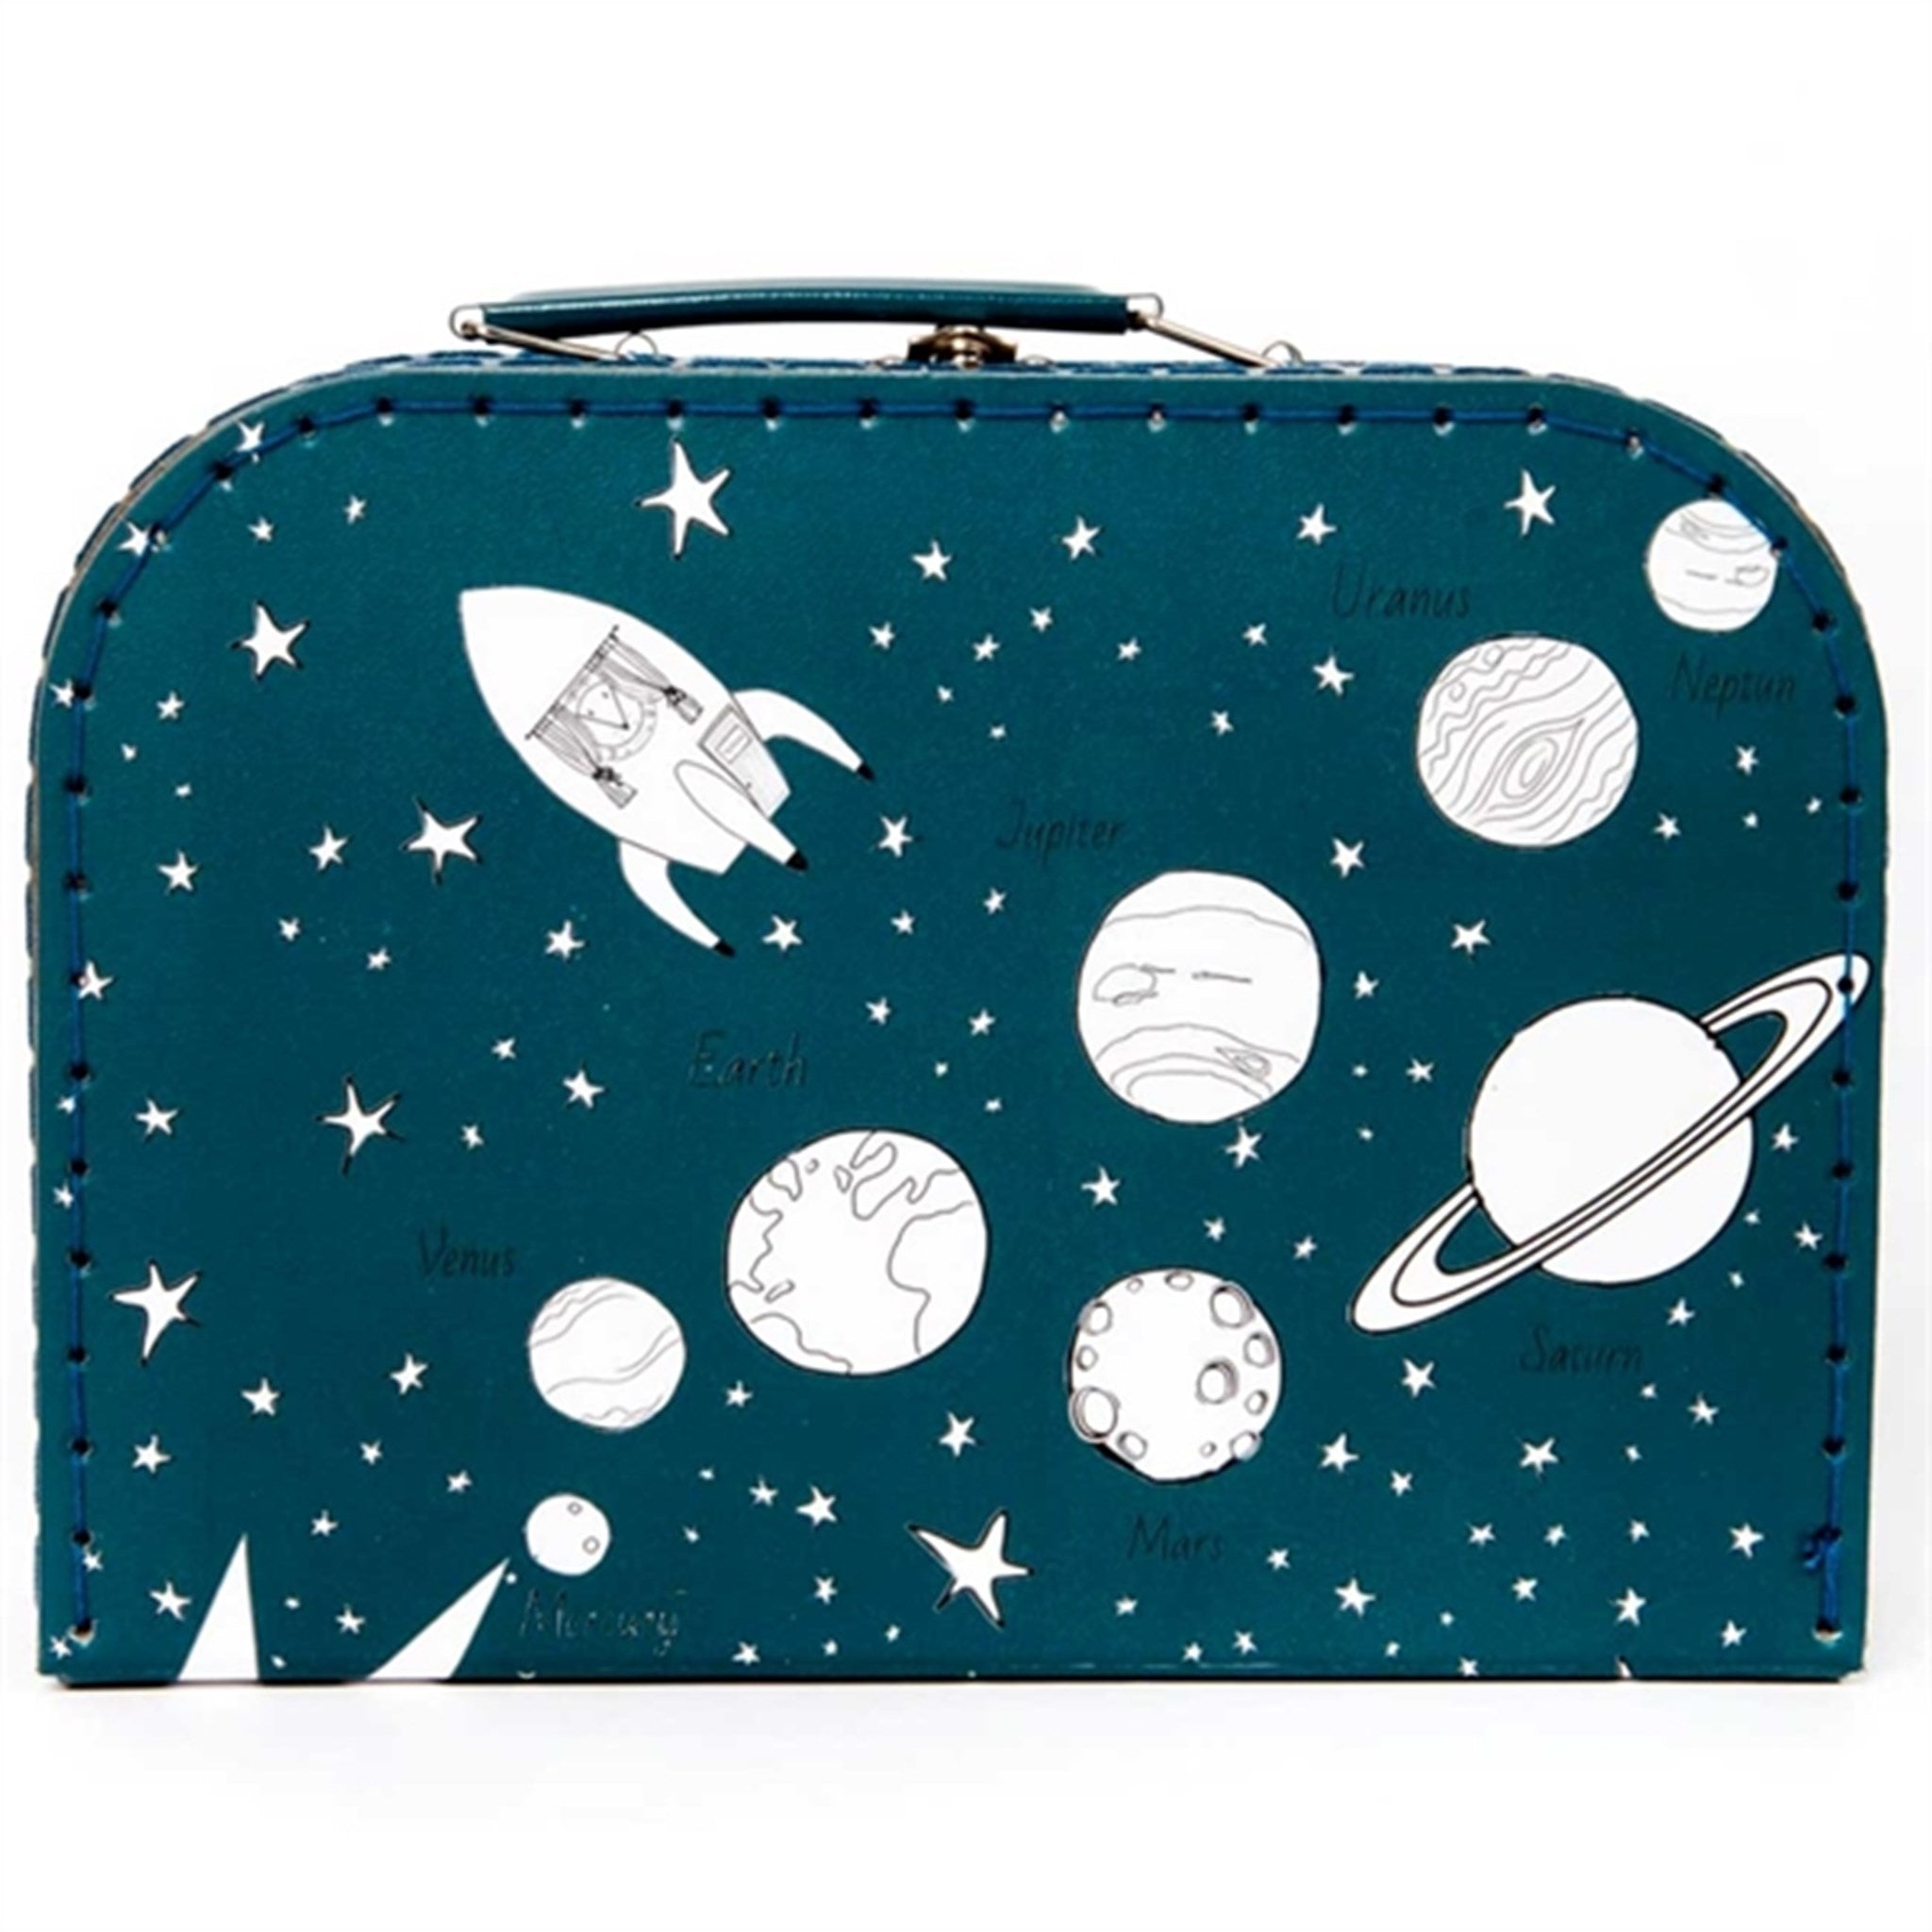 Pellianni Space Bag Midnight